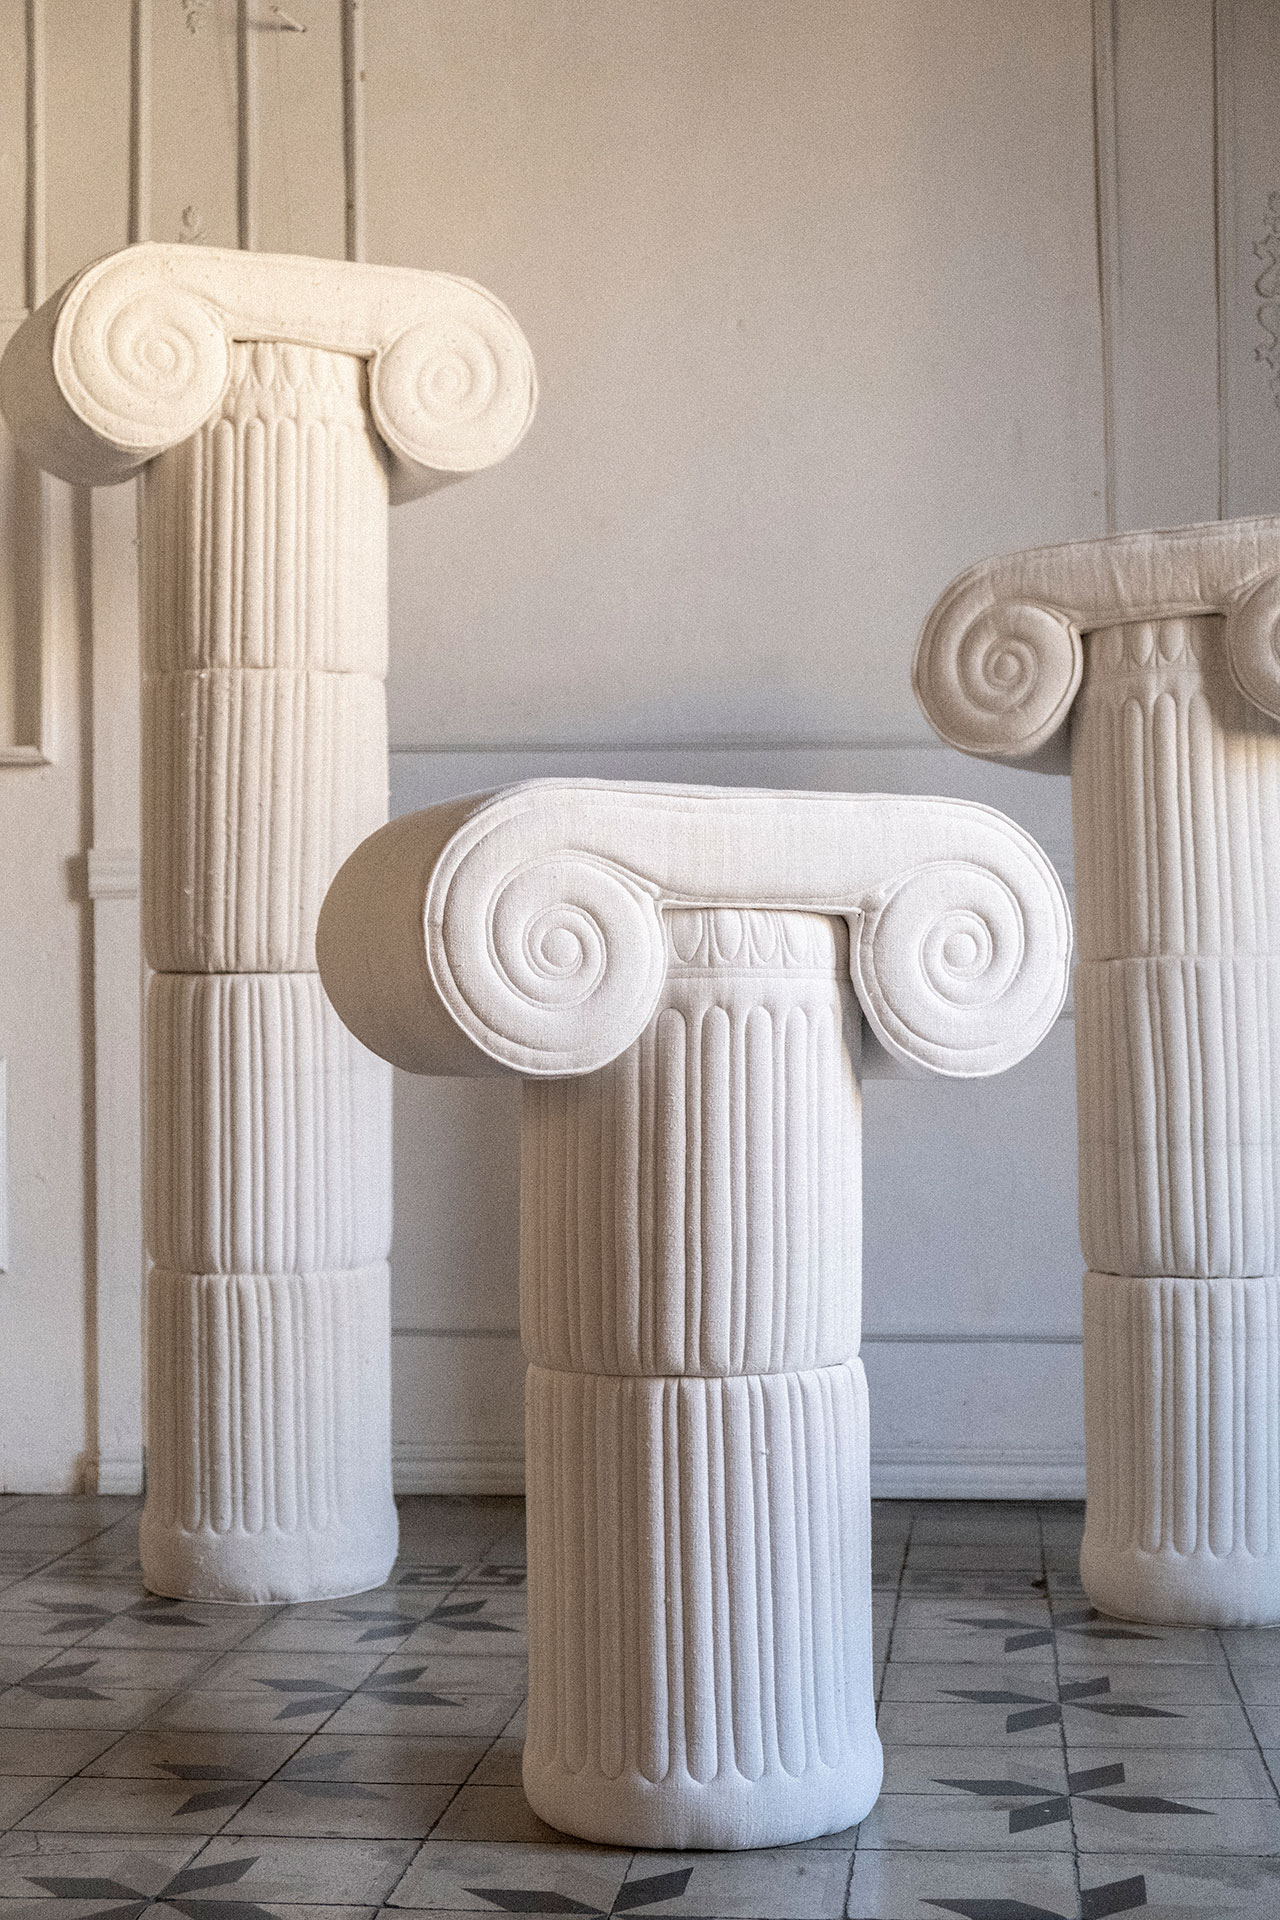 Ionic Columns.
Photography © Sergio Roger.